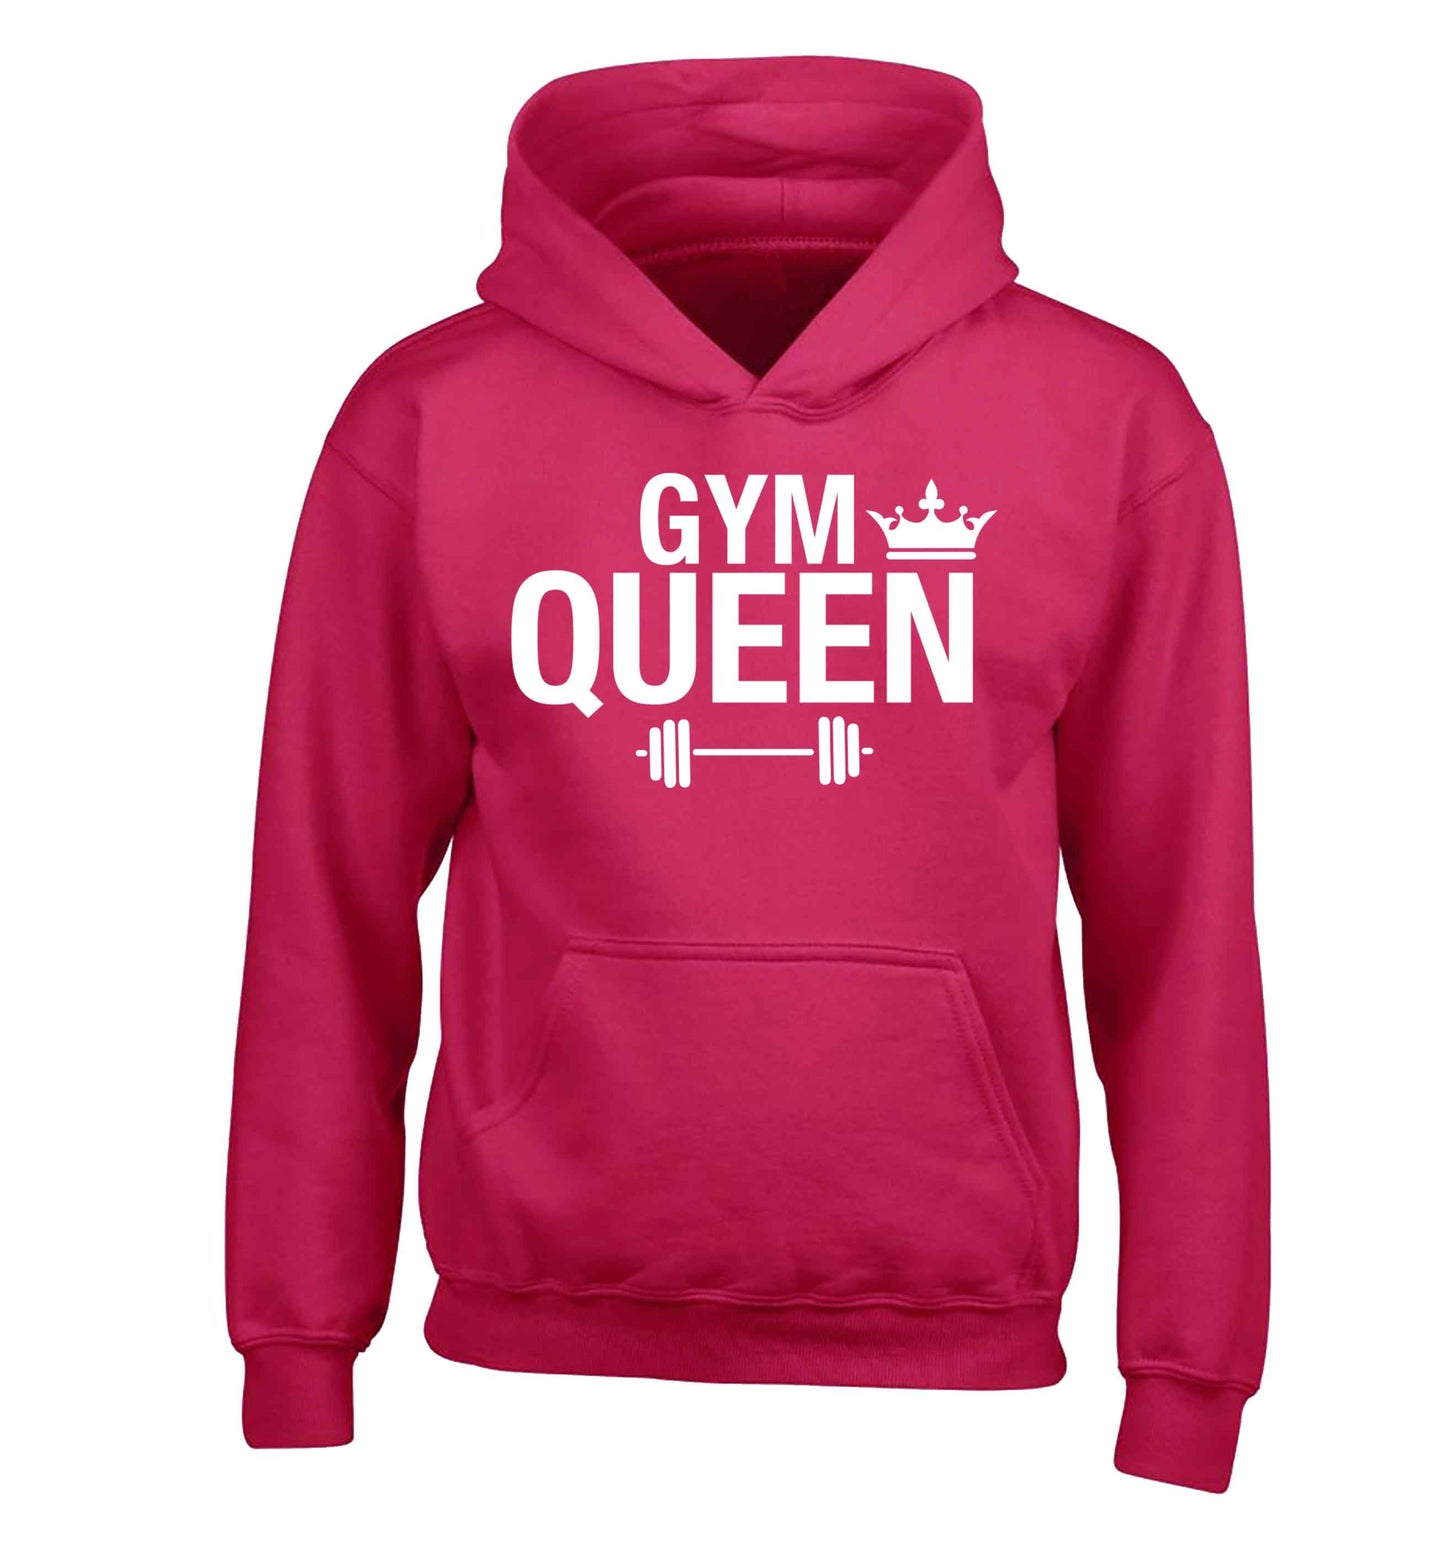 Gym queen children's pink hoodie 12-13 Years